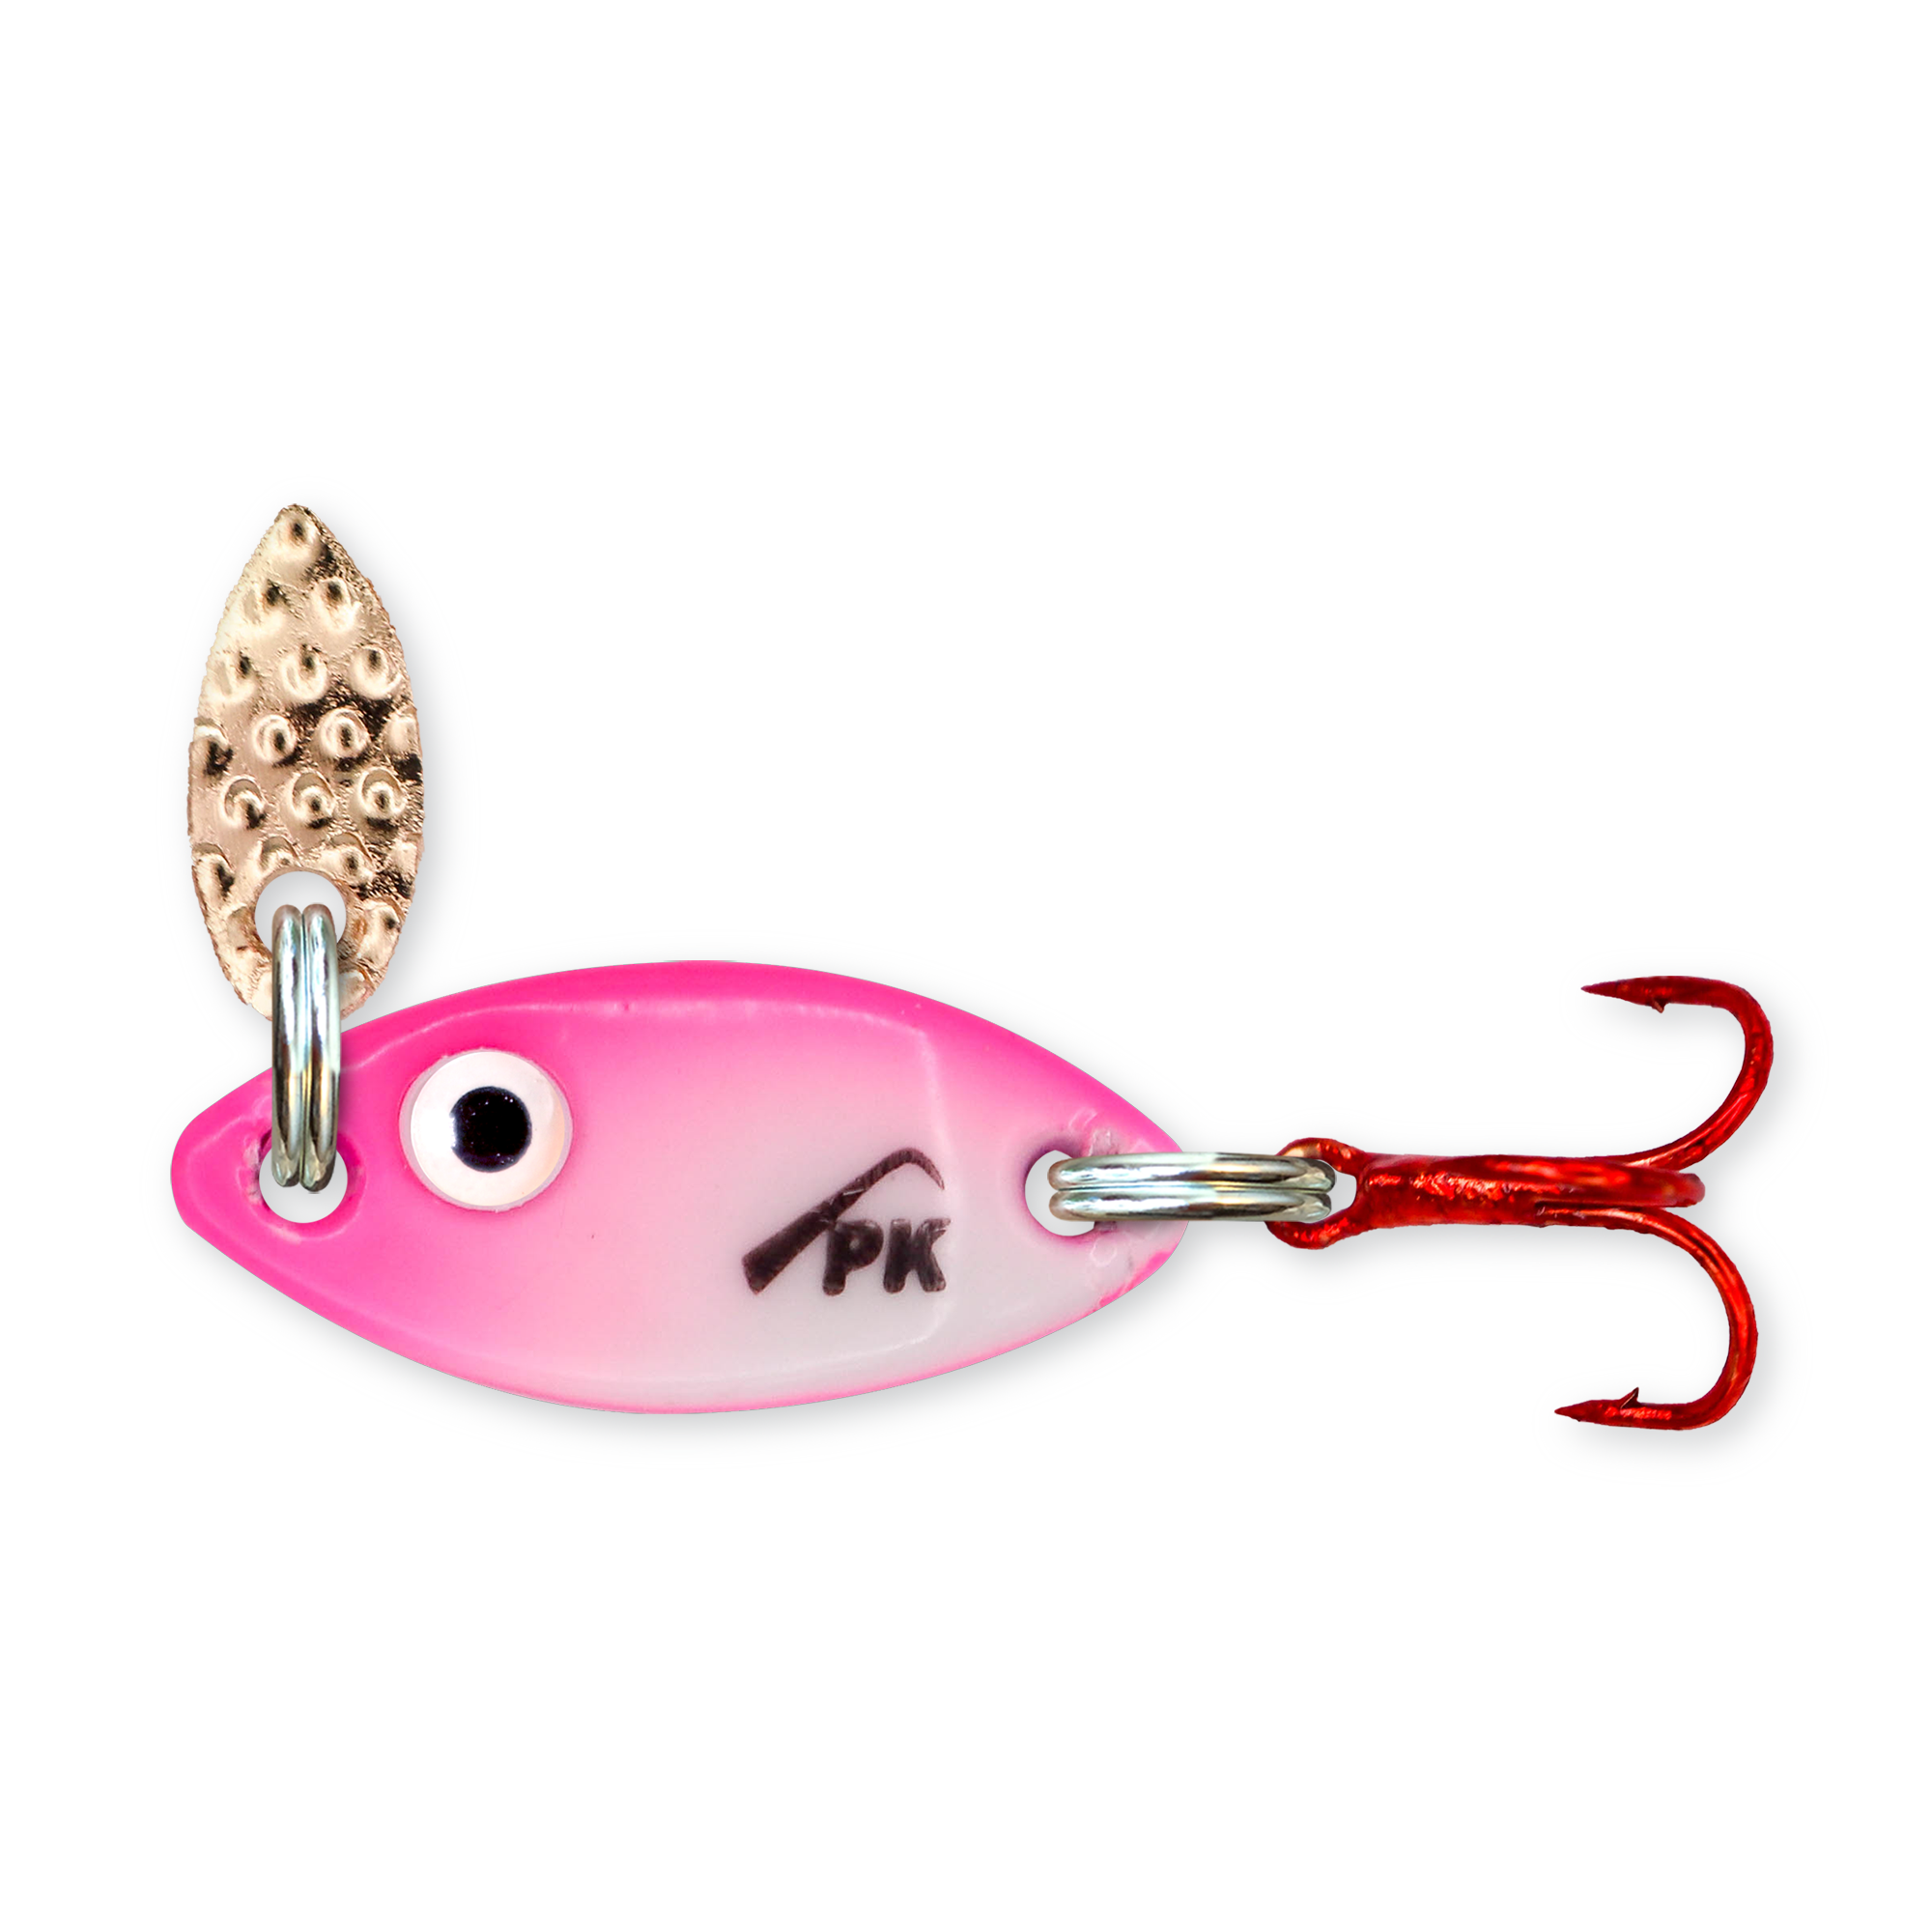 Tungsten 1/16 oz. - PK Predator Flash Fishing Spoon - Pink Pearl Glow /  1/16oz